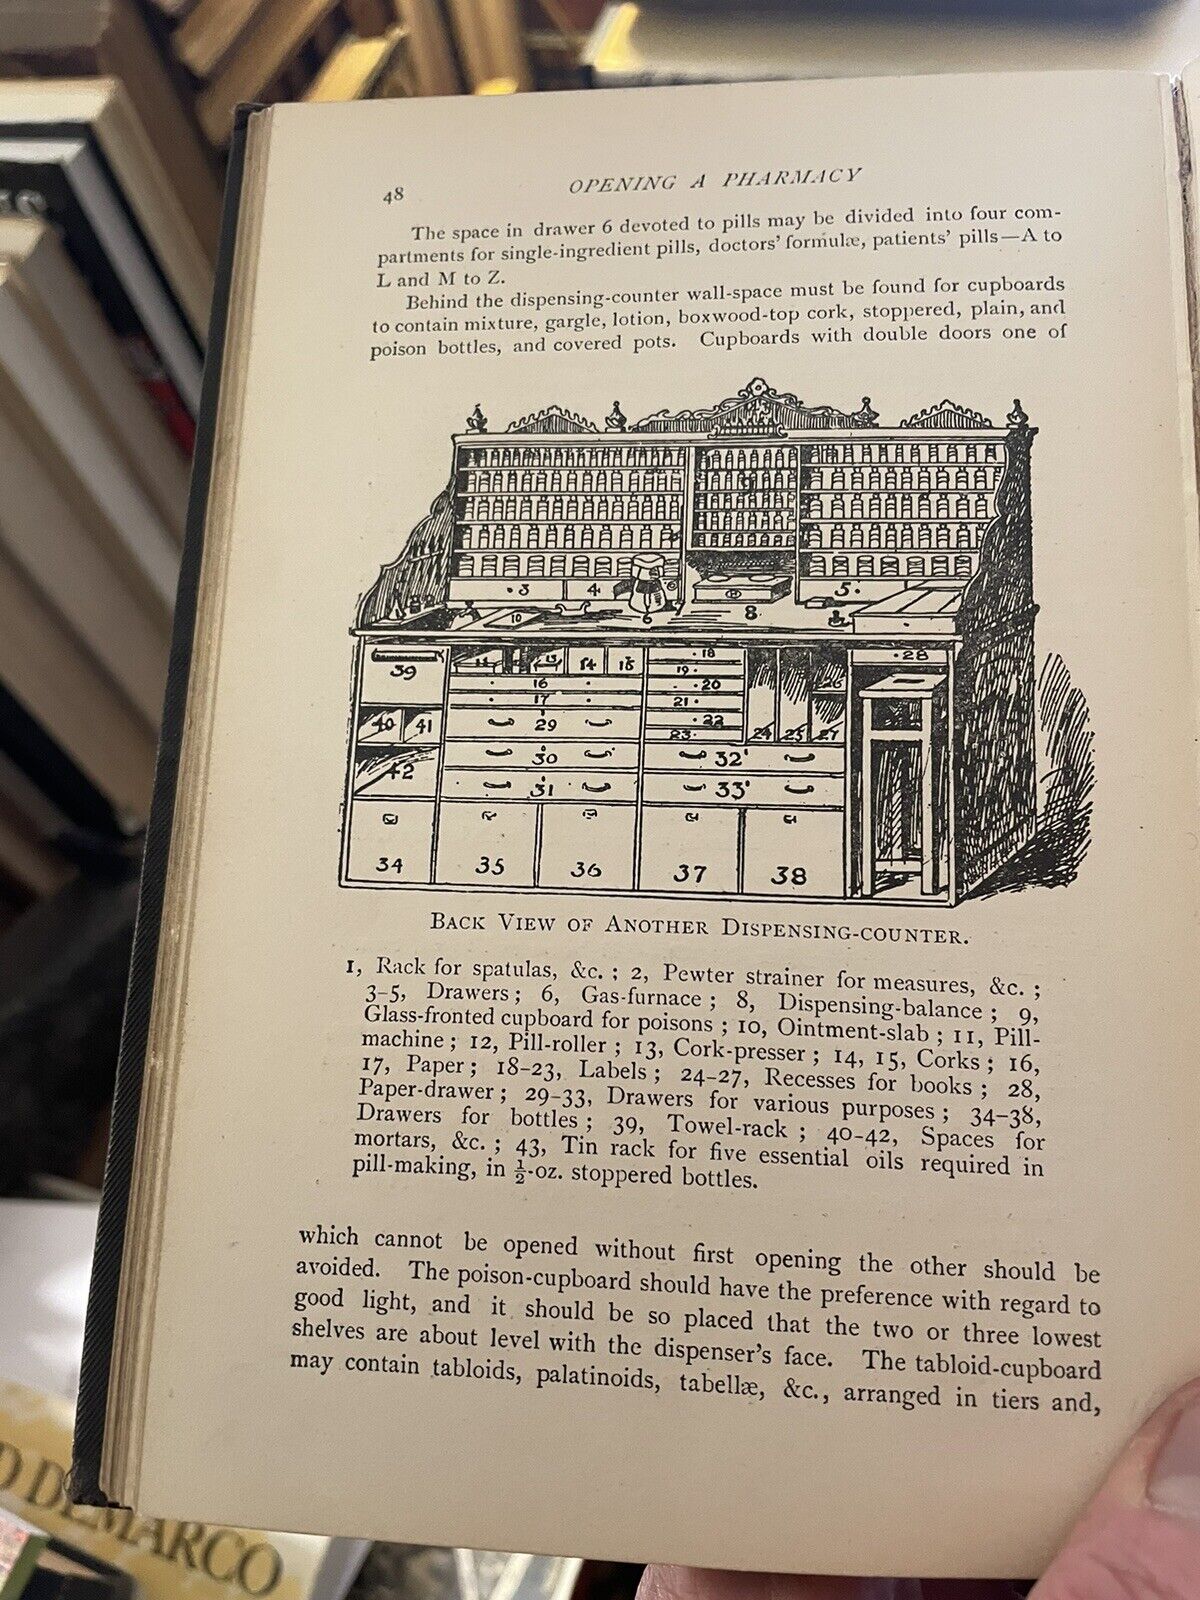 1904 Opening a Pharmacy : Chemists & Druggists : Sale of Poisons : Shopfitting